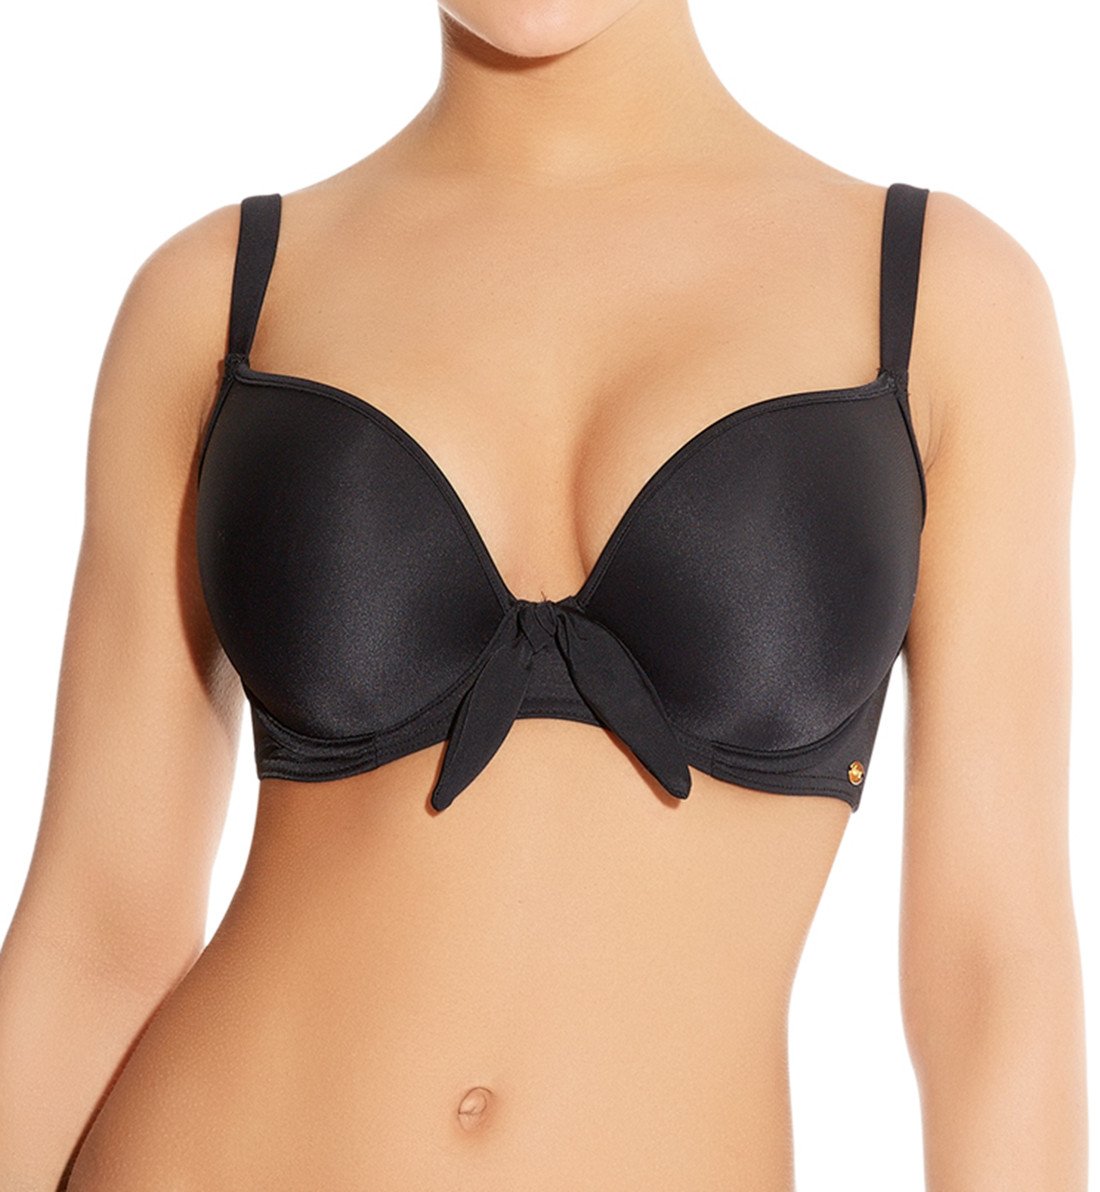 Freya Deco Molded Underwire Bikini Swim Top (3284)- Black - Breakout Bras